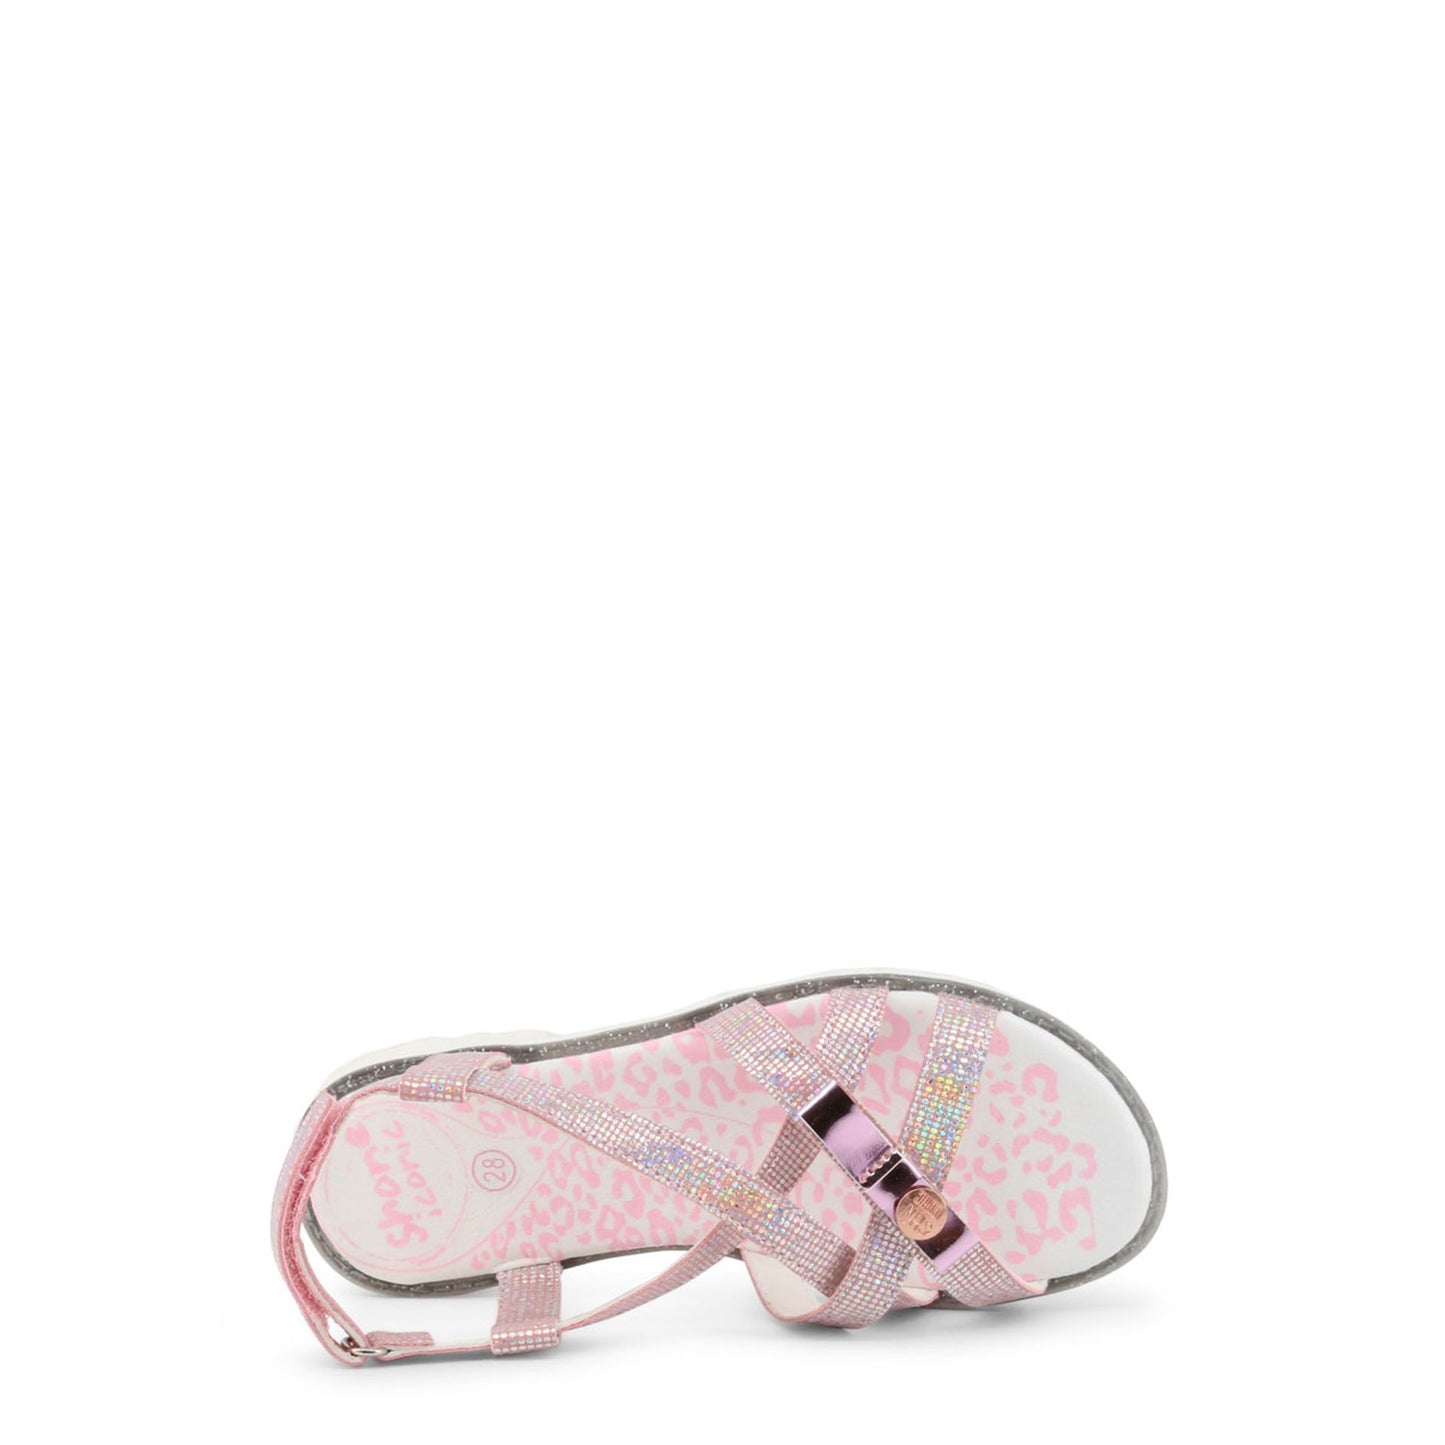 Sandali bambina rosa con velcro e glitter